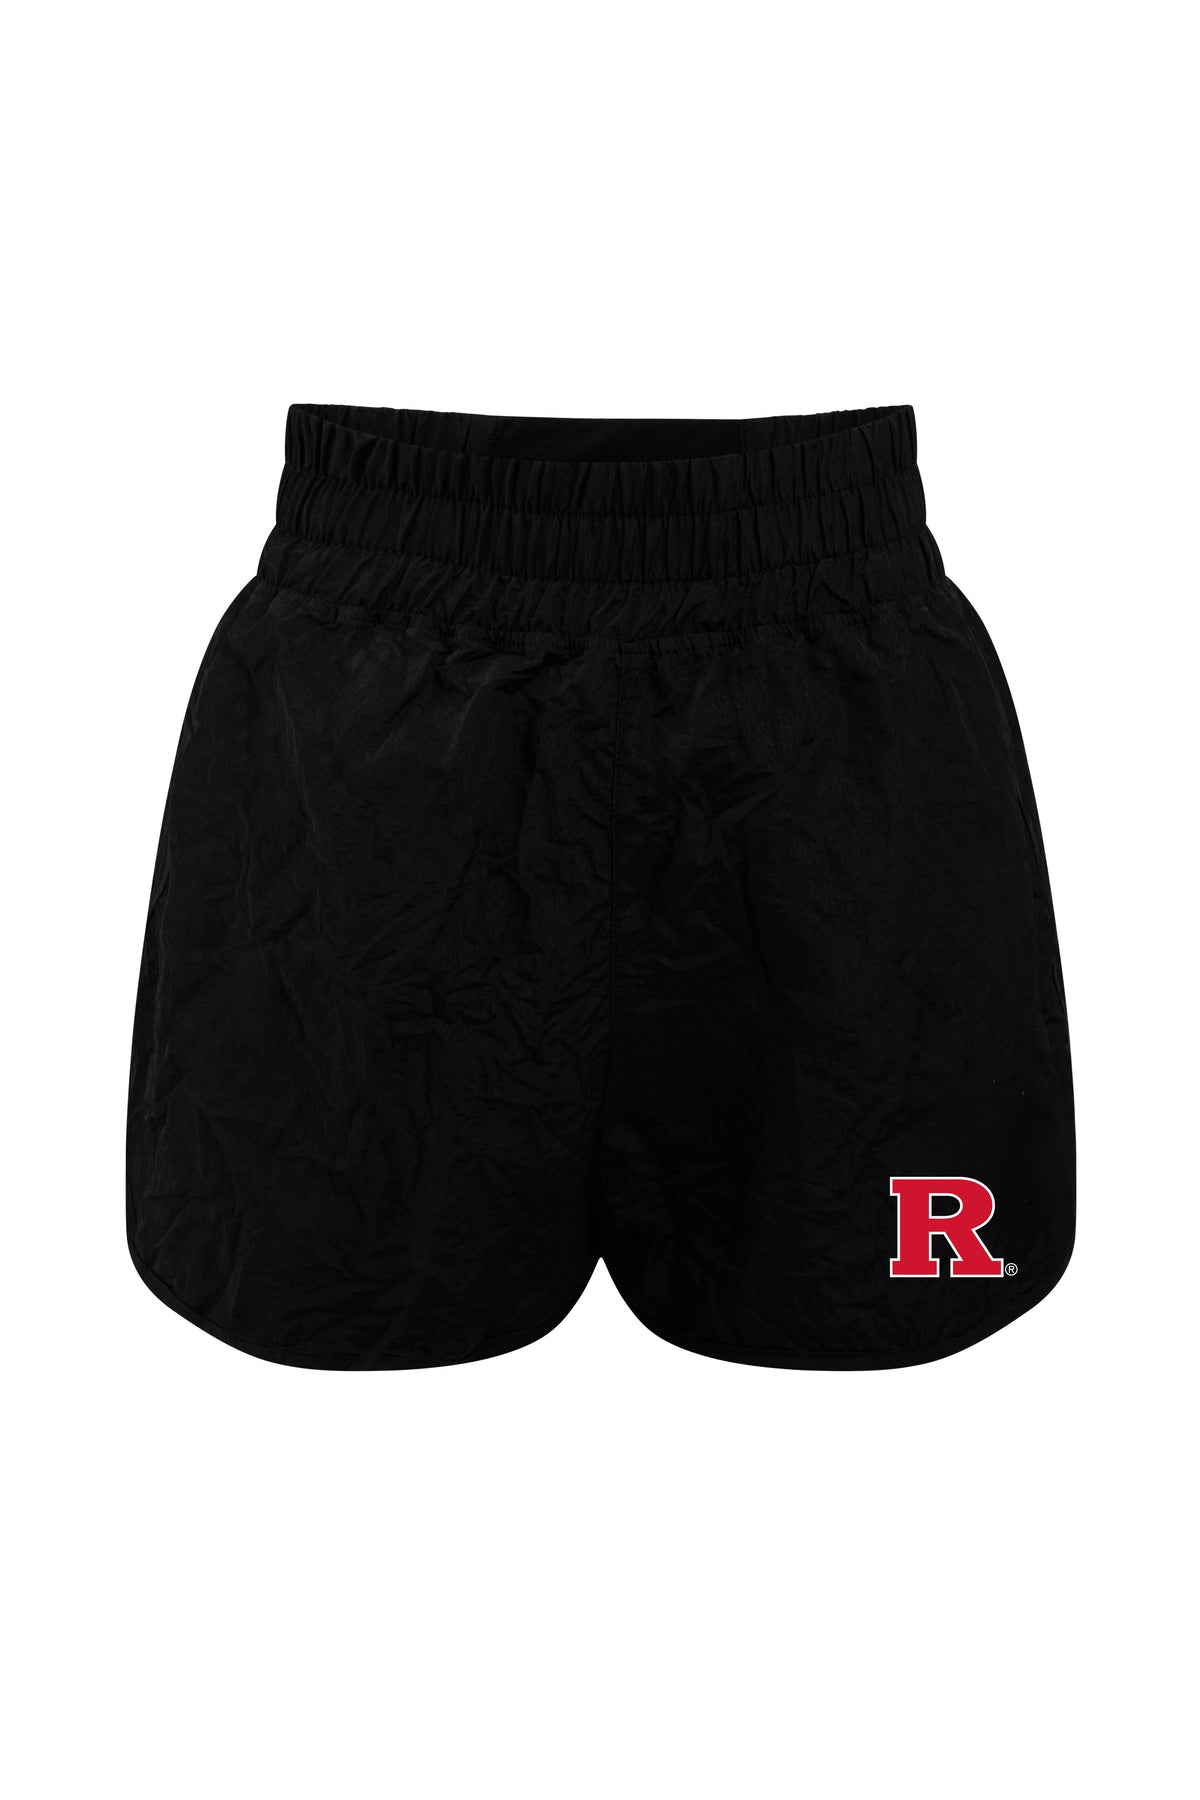 Rutgers University Boxer Short